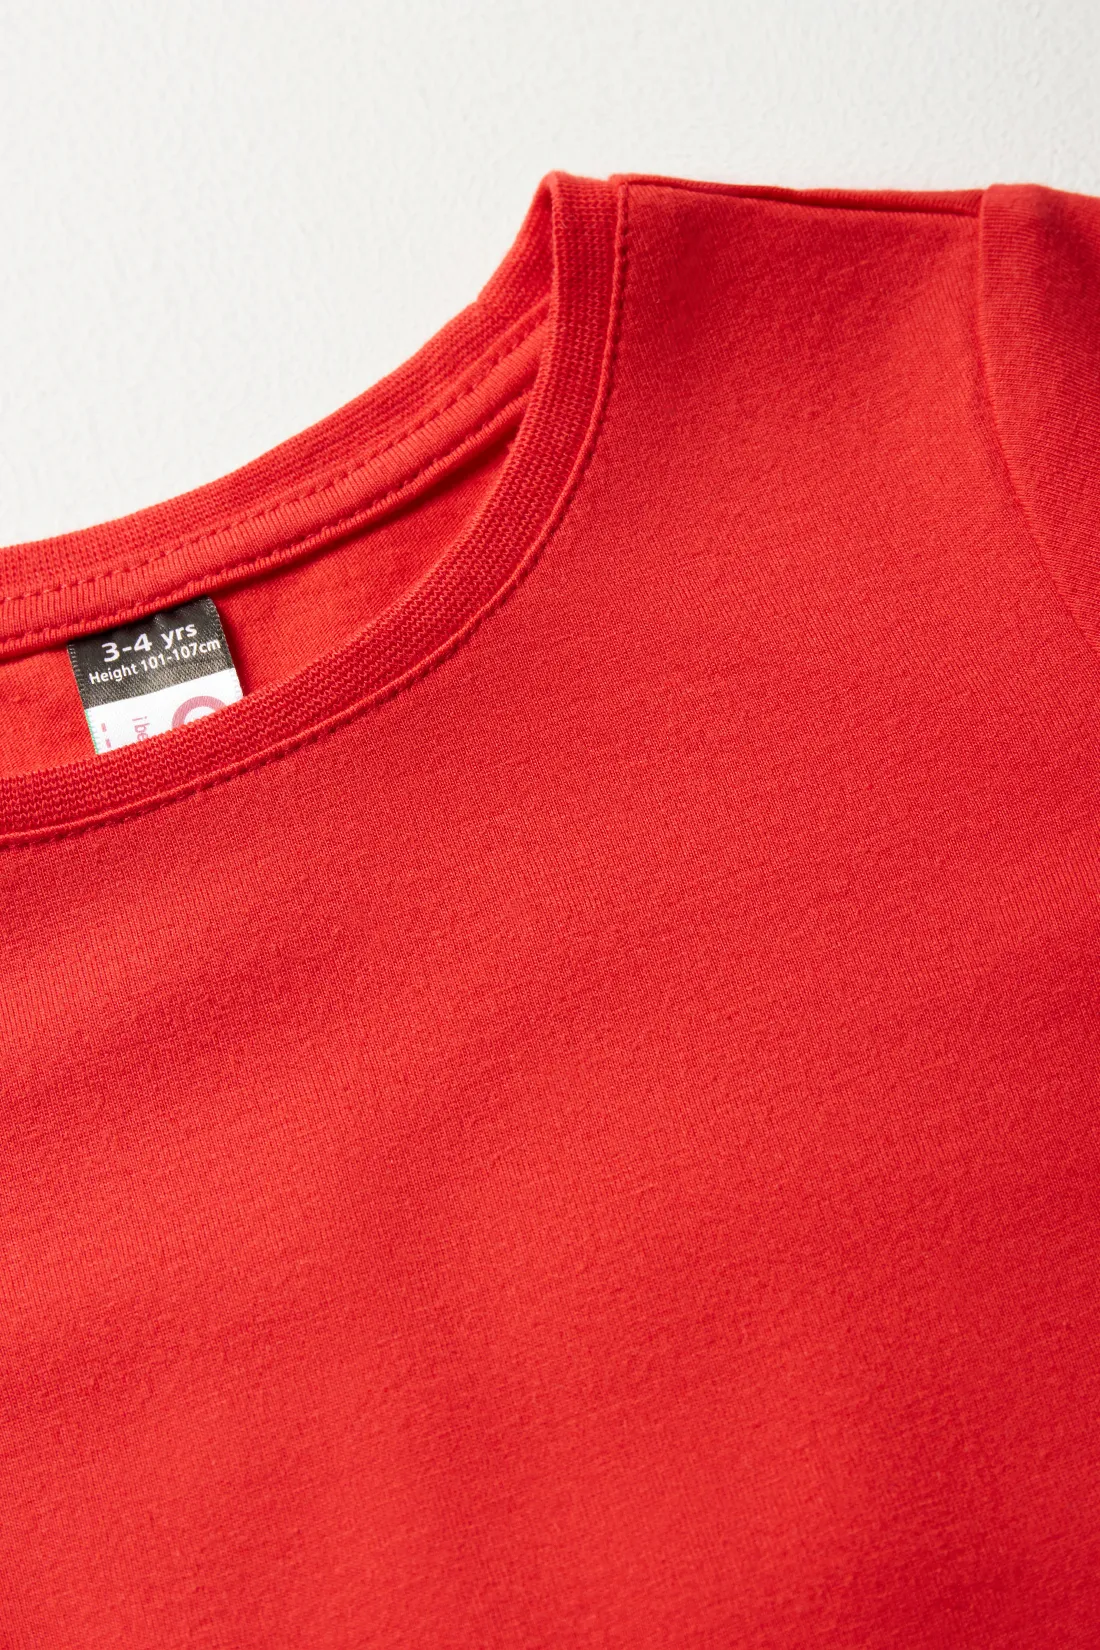 Short sleeve t-shirt red - GIRLS 2-10 YEARS Tops & T-Shirts | Ackermans